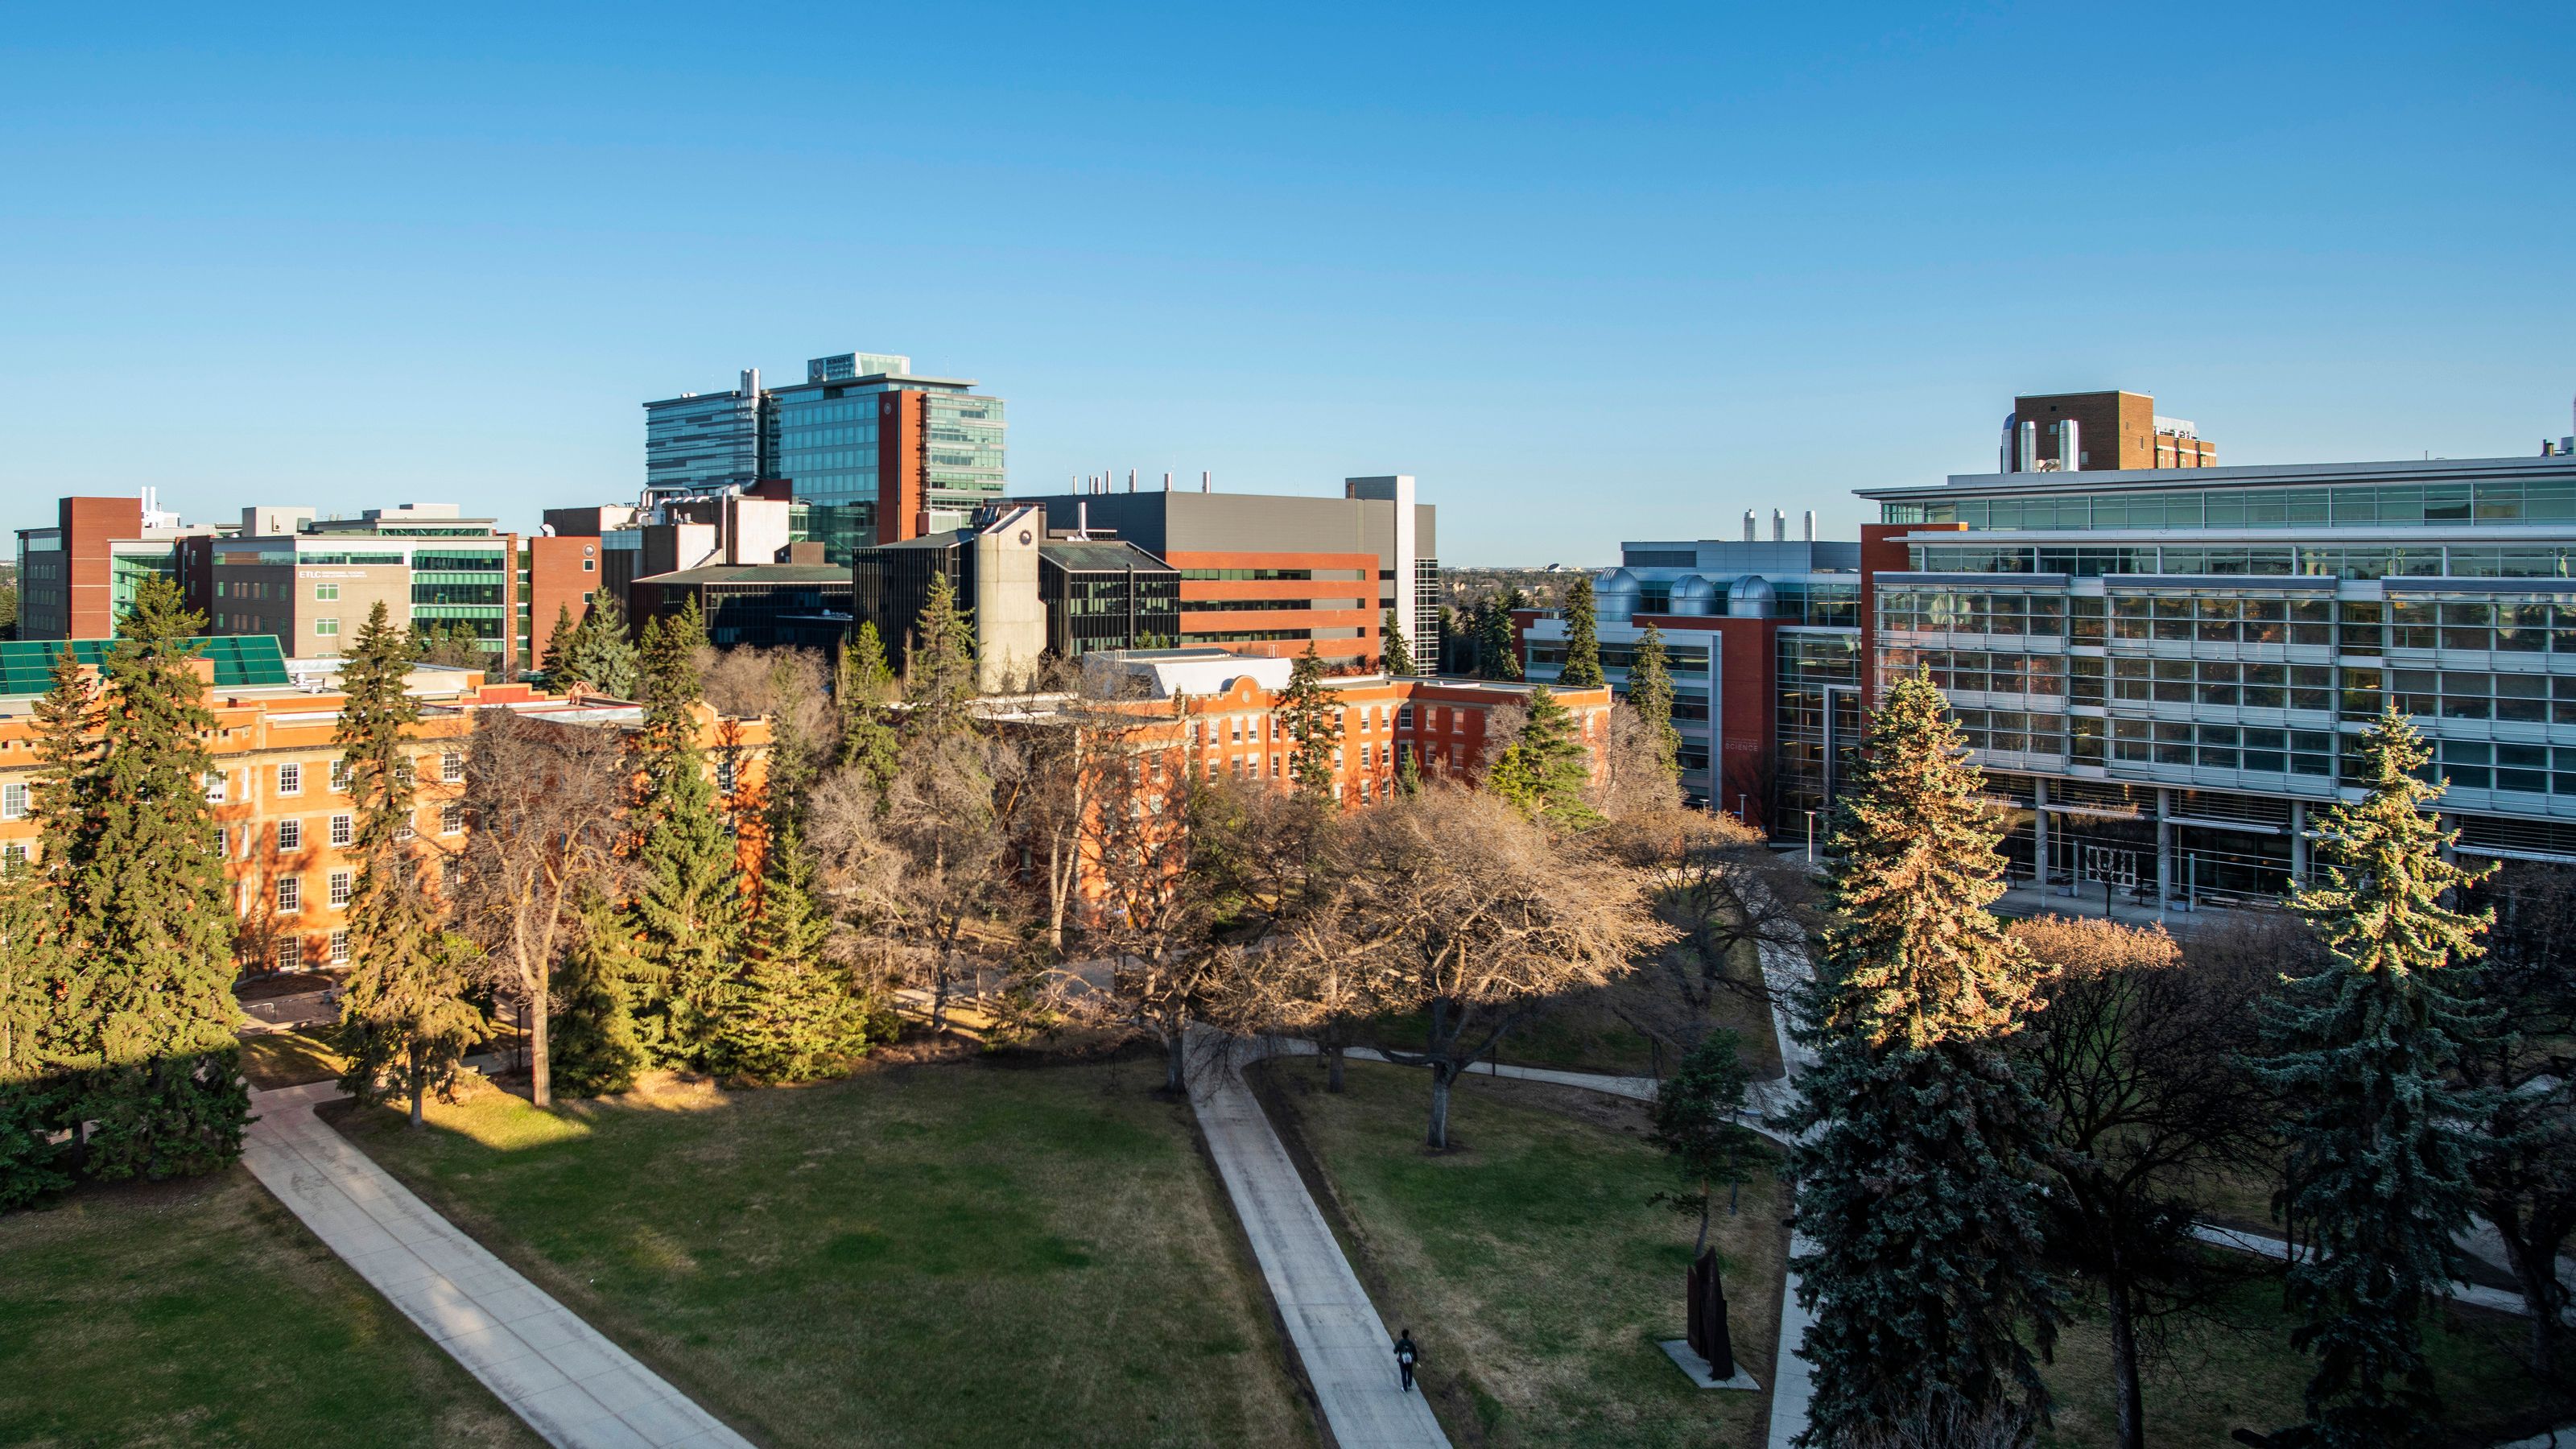 The University of Alberta Main Quad, on May 1, 2020.